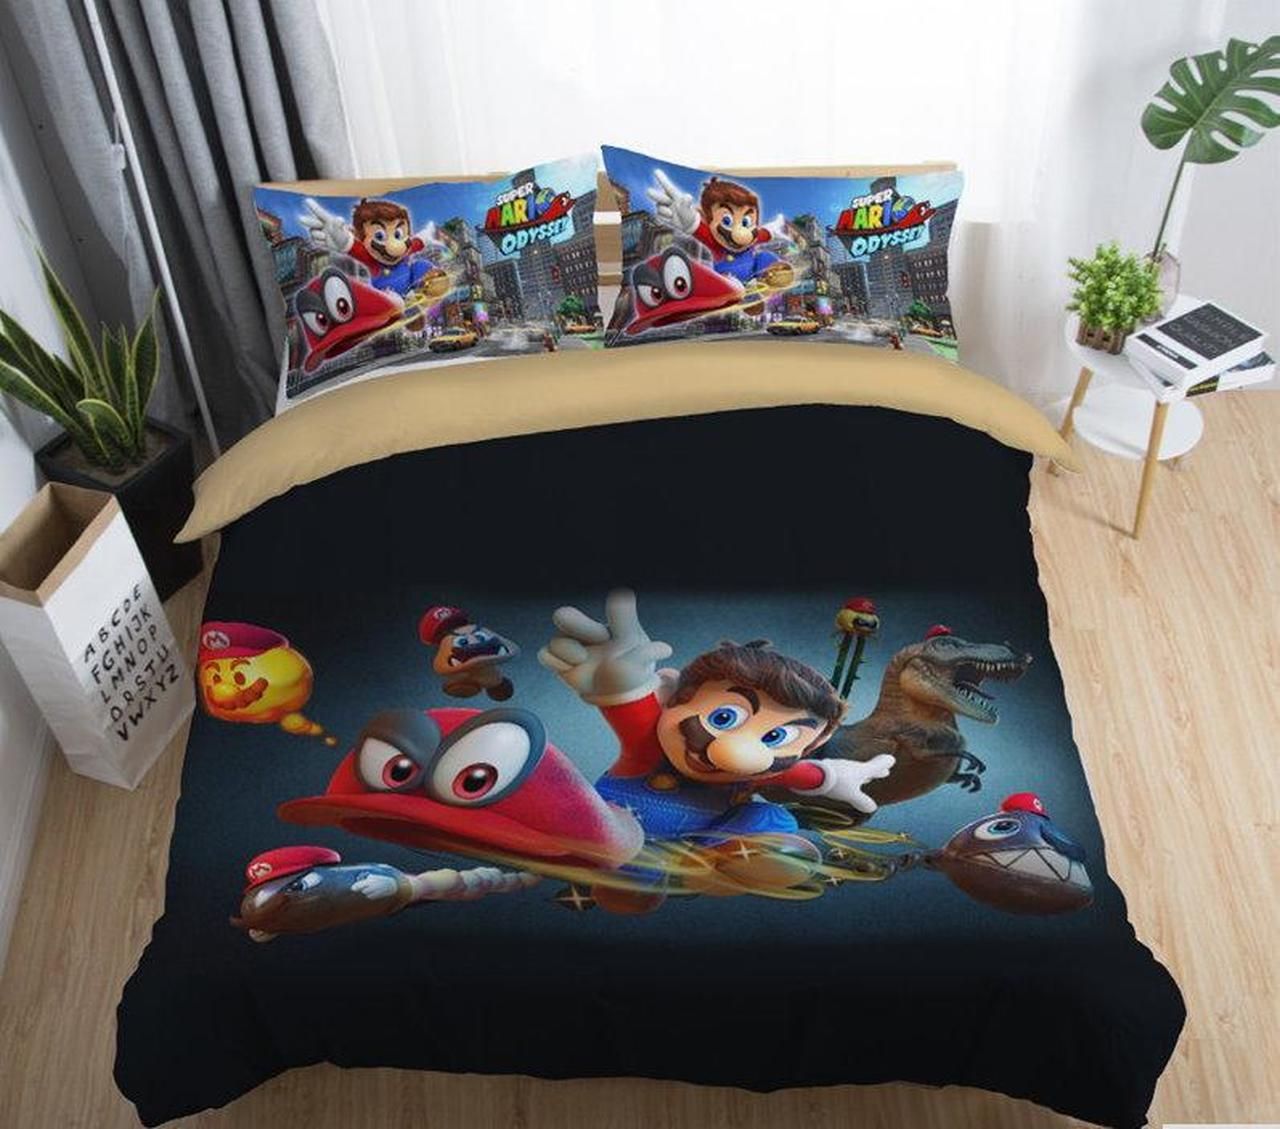 Super Mario Odyssey Bedding Set